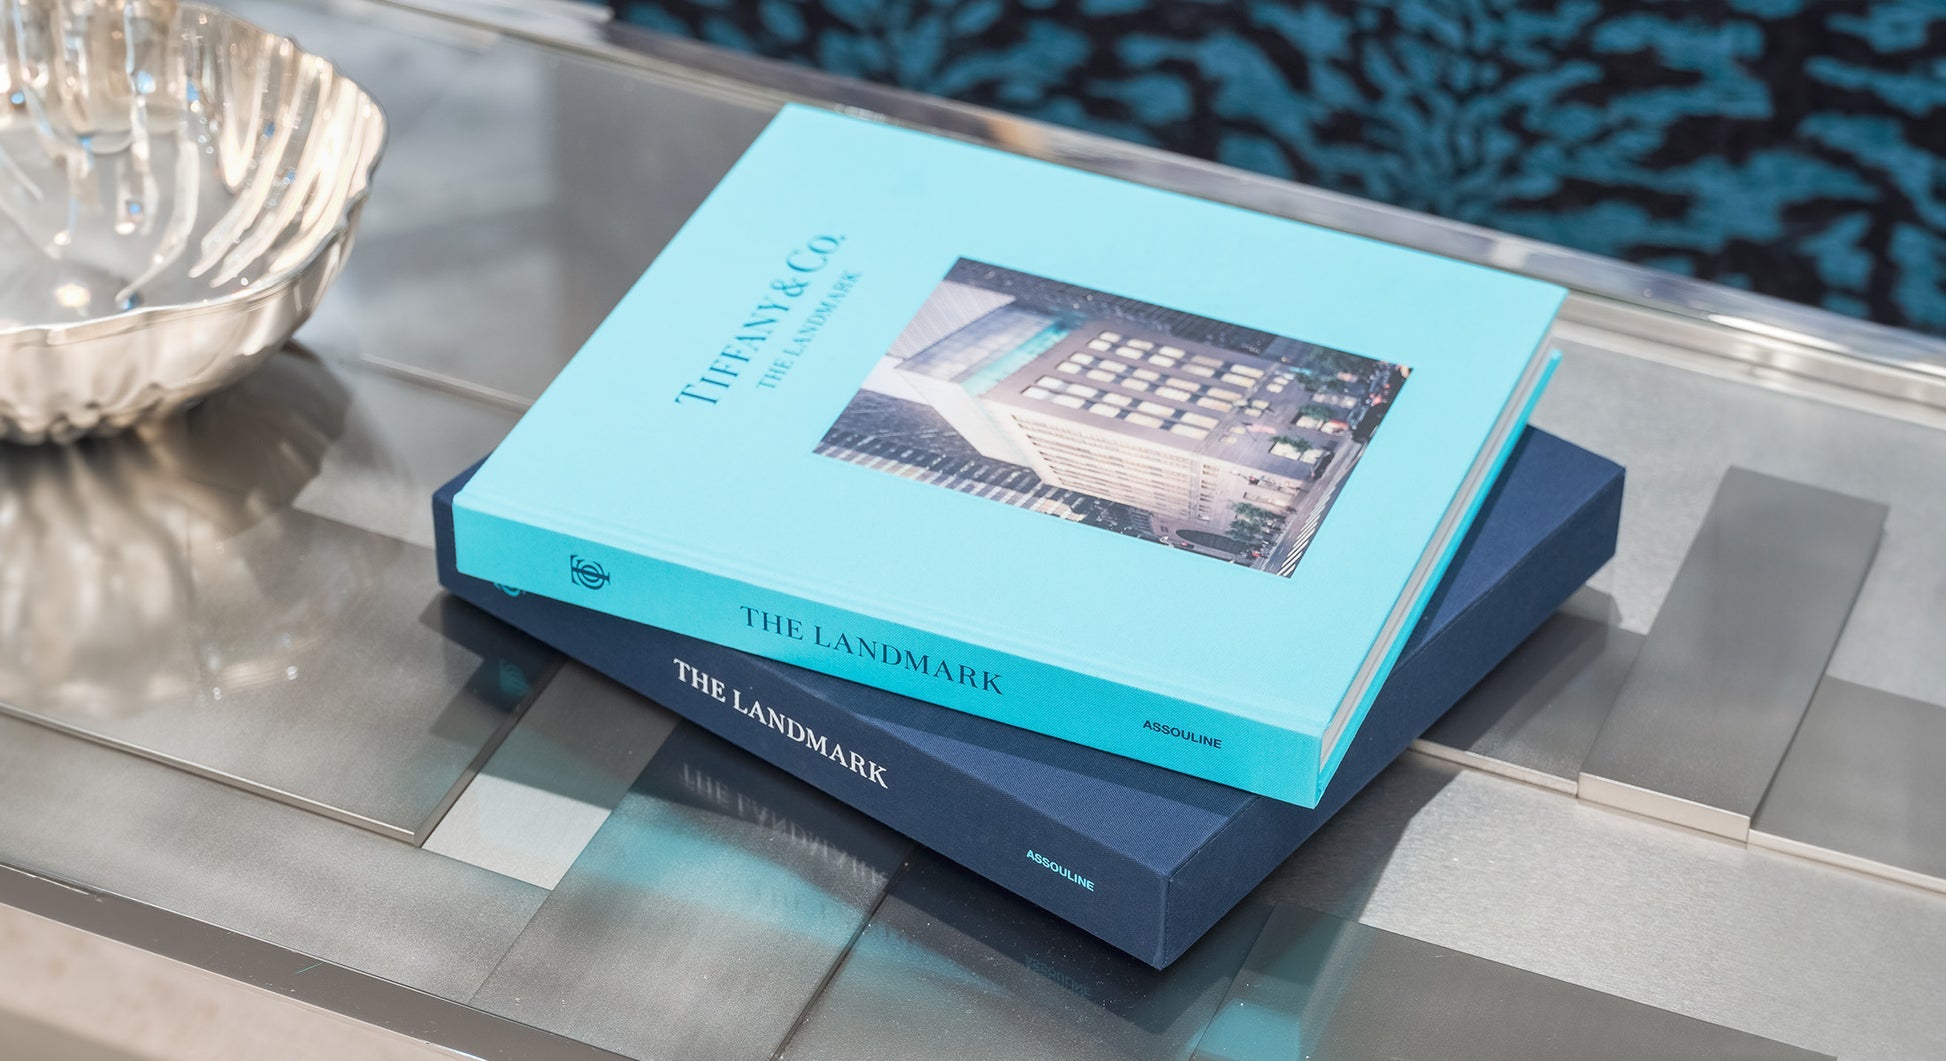 Assouline | Tiffany & Co.: The Landmark